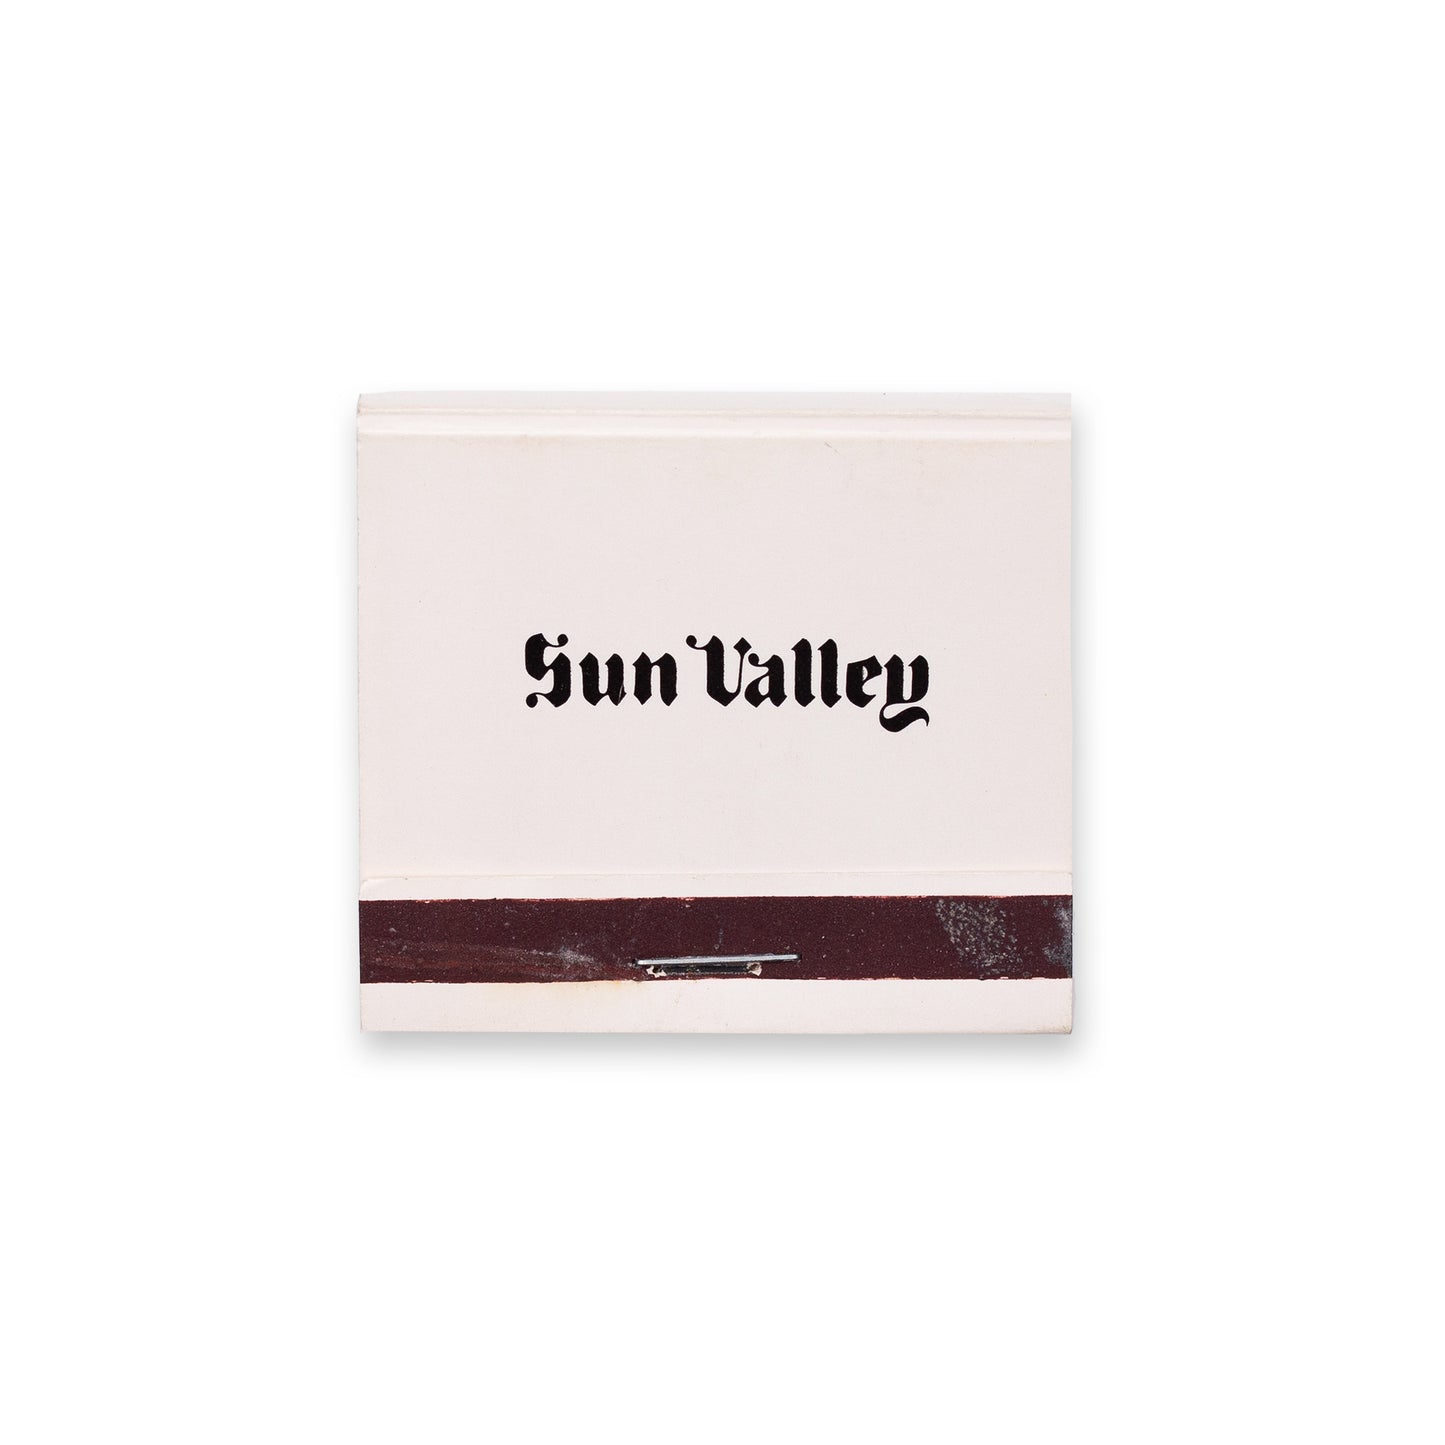 Sun Valley (black)